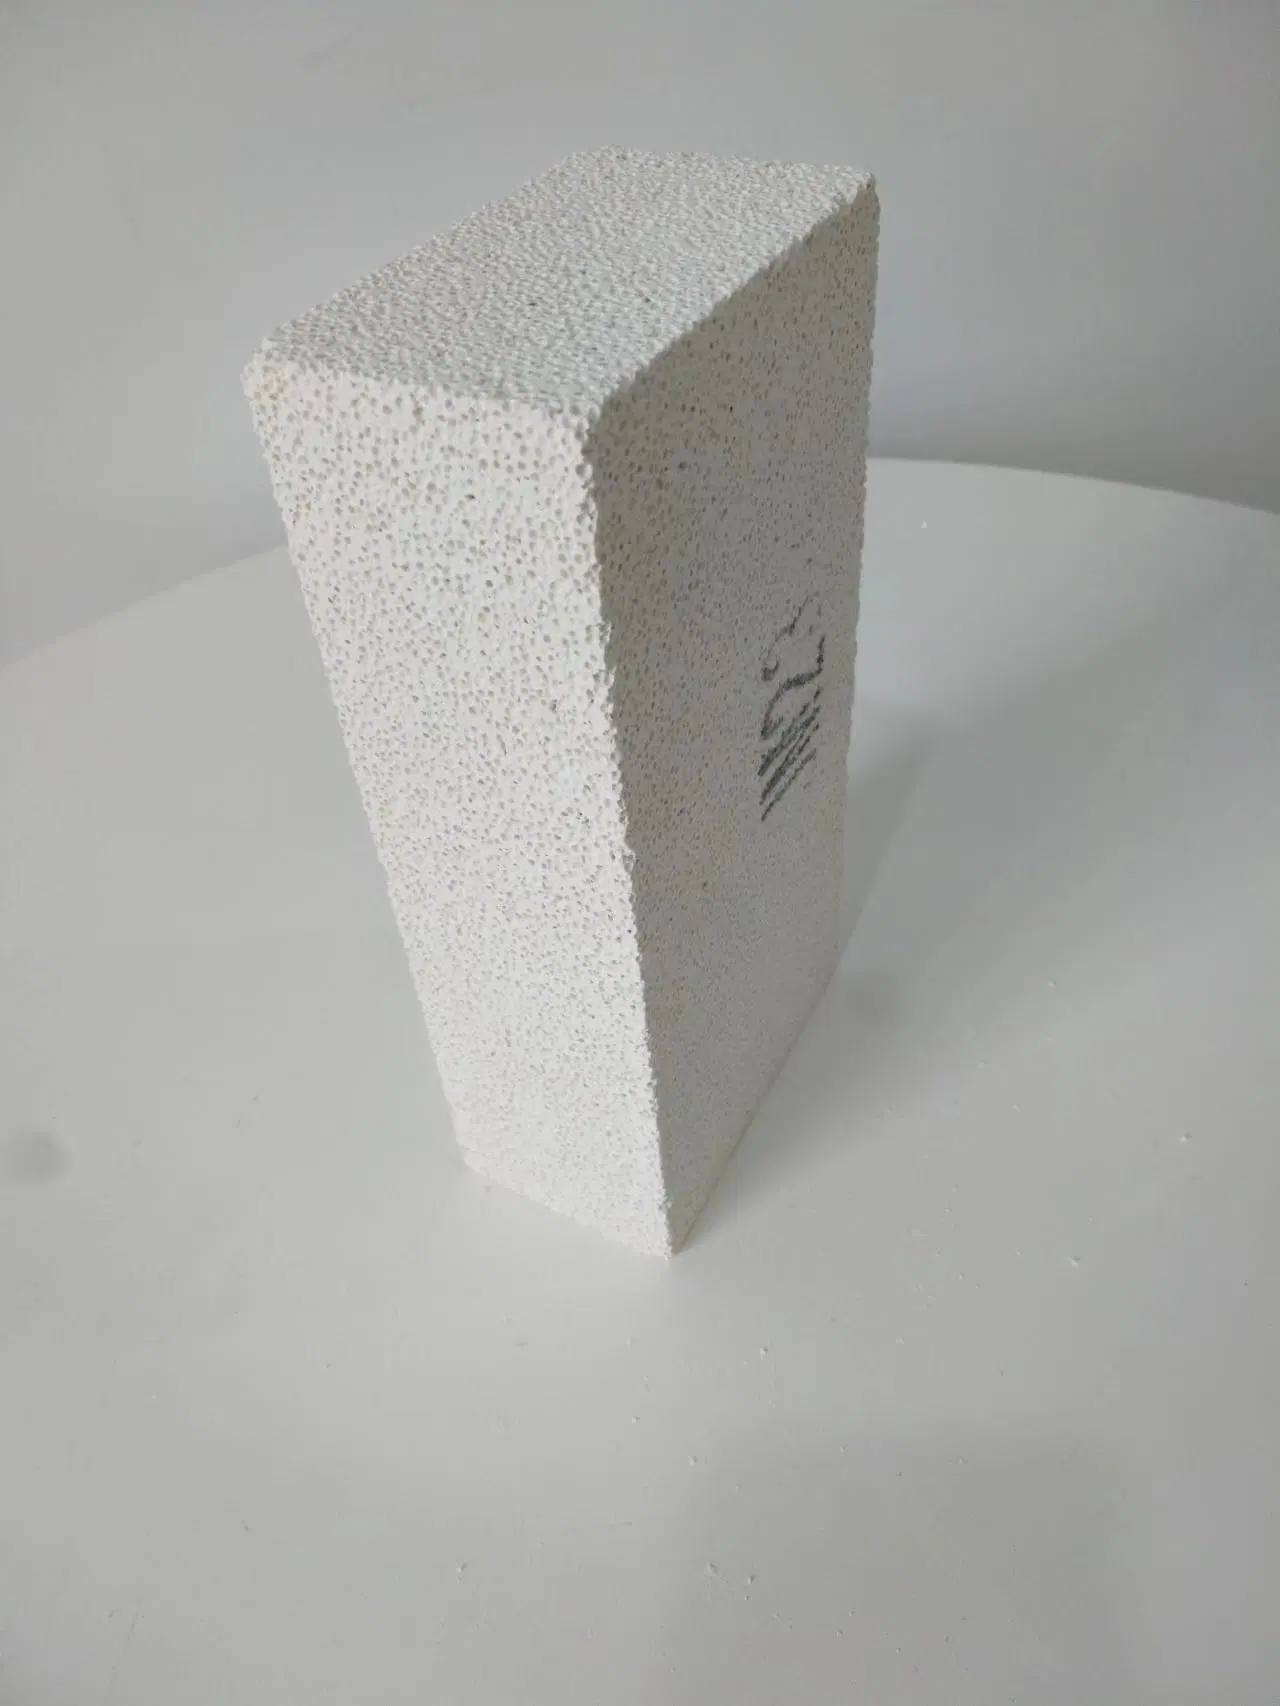 Zibo Hitech Furnace Uses Jm-26 Refractory Light Weight Mullite Insulation Brick